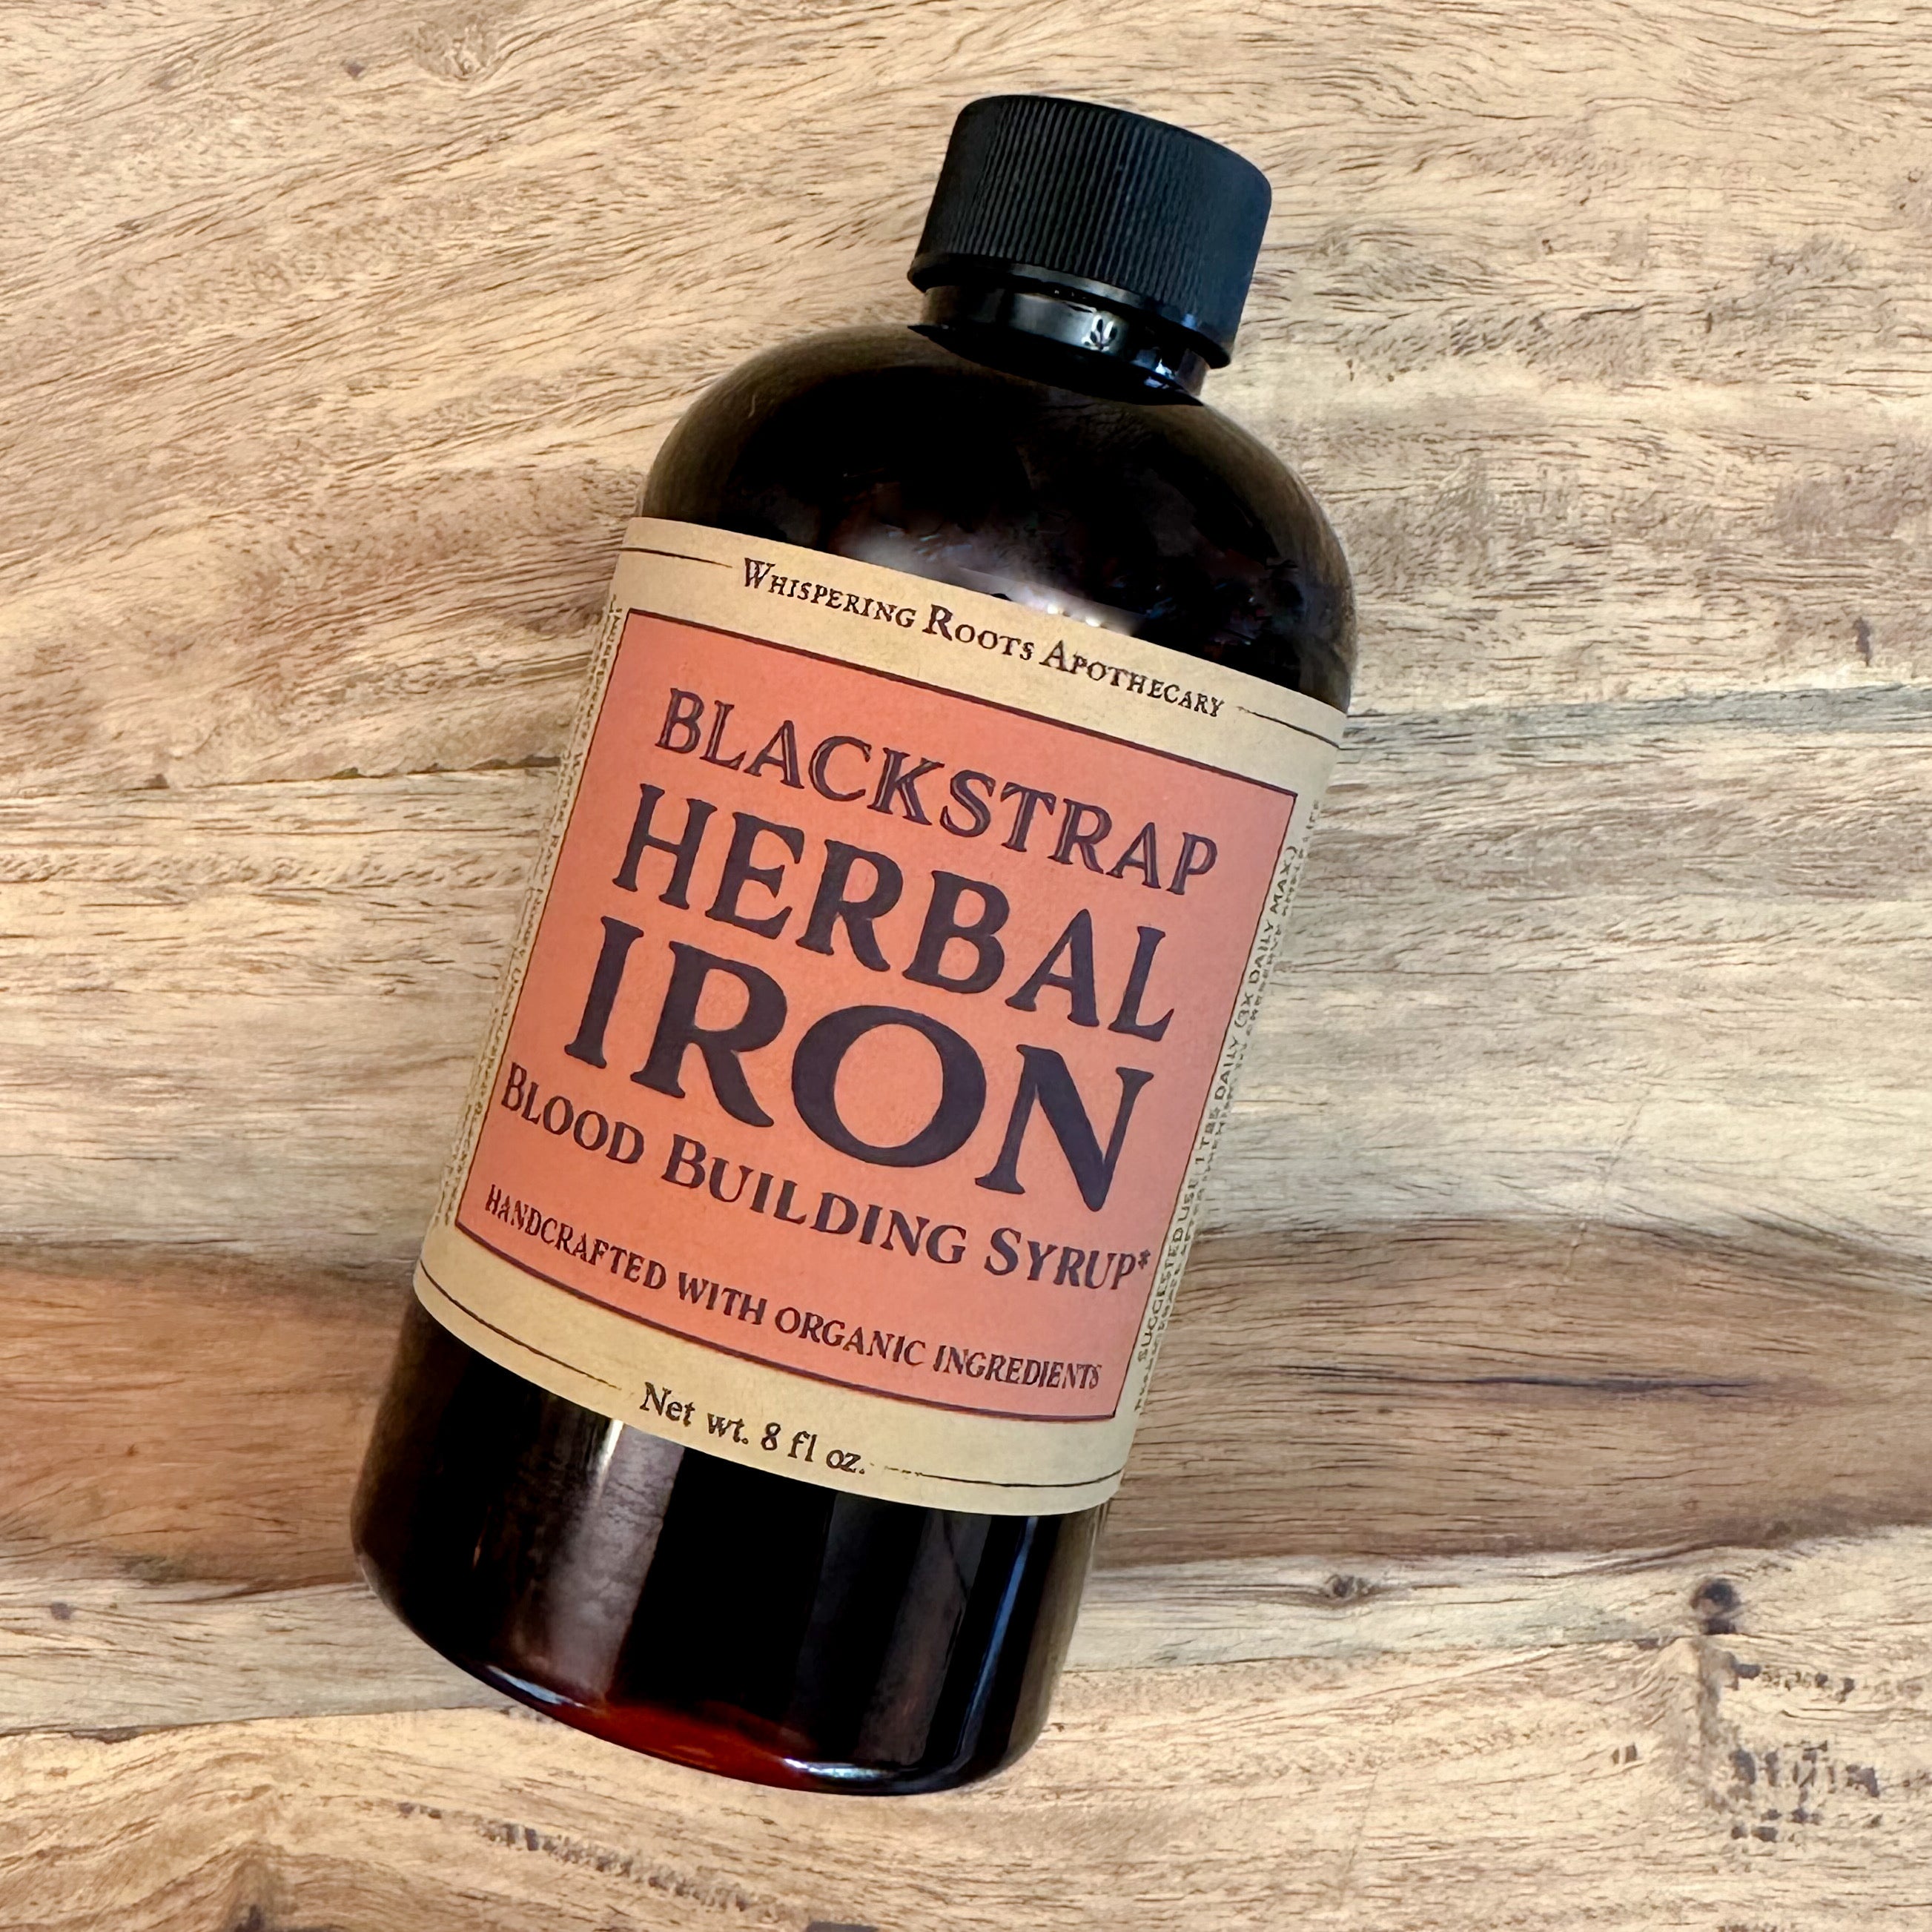 Blackstrap Herbal Iron // Blood Building Syrup*